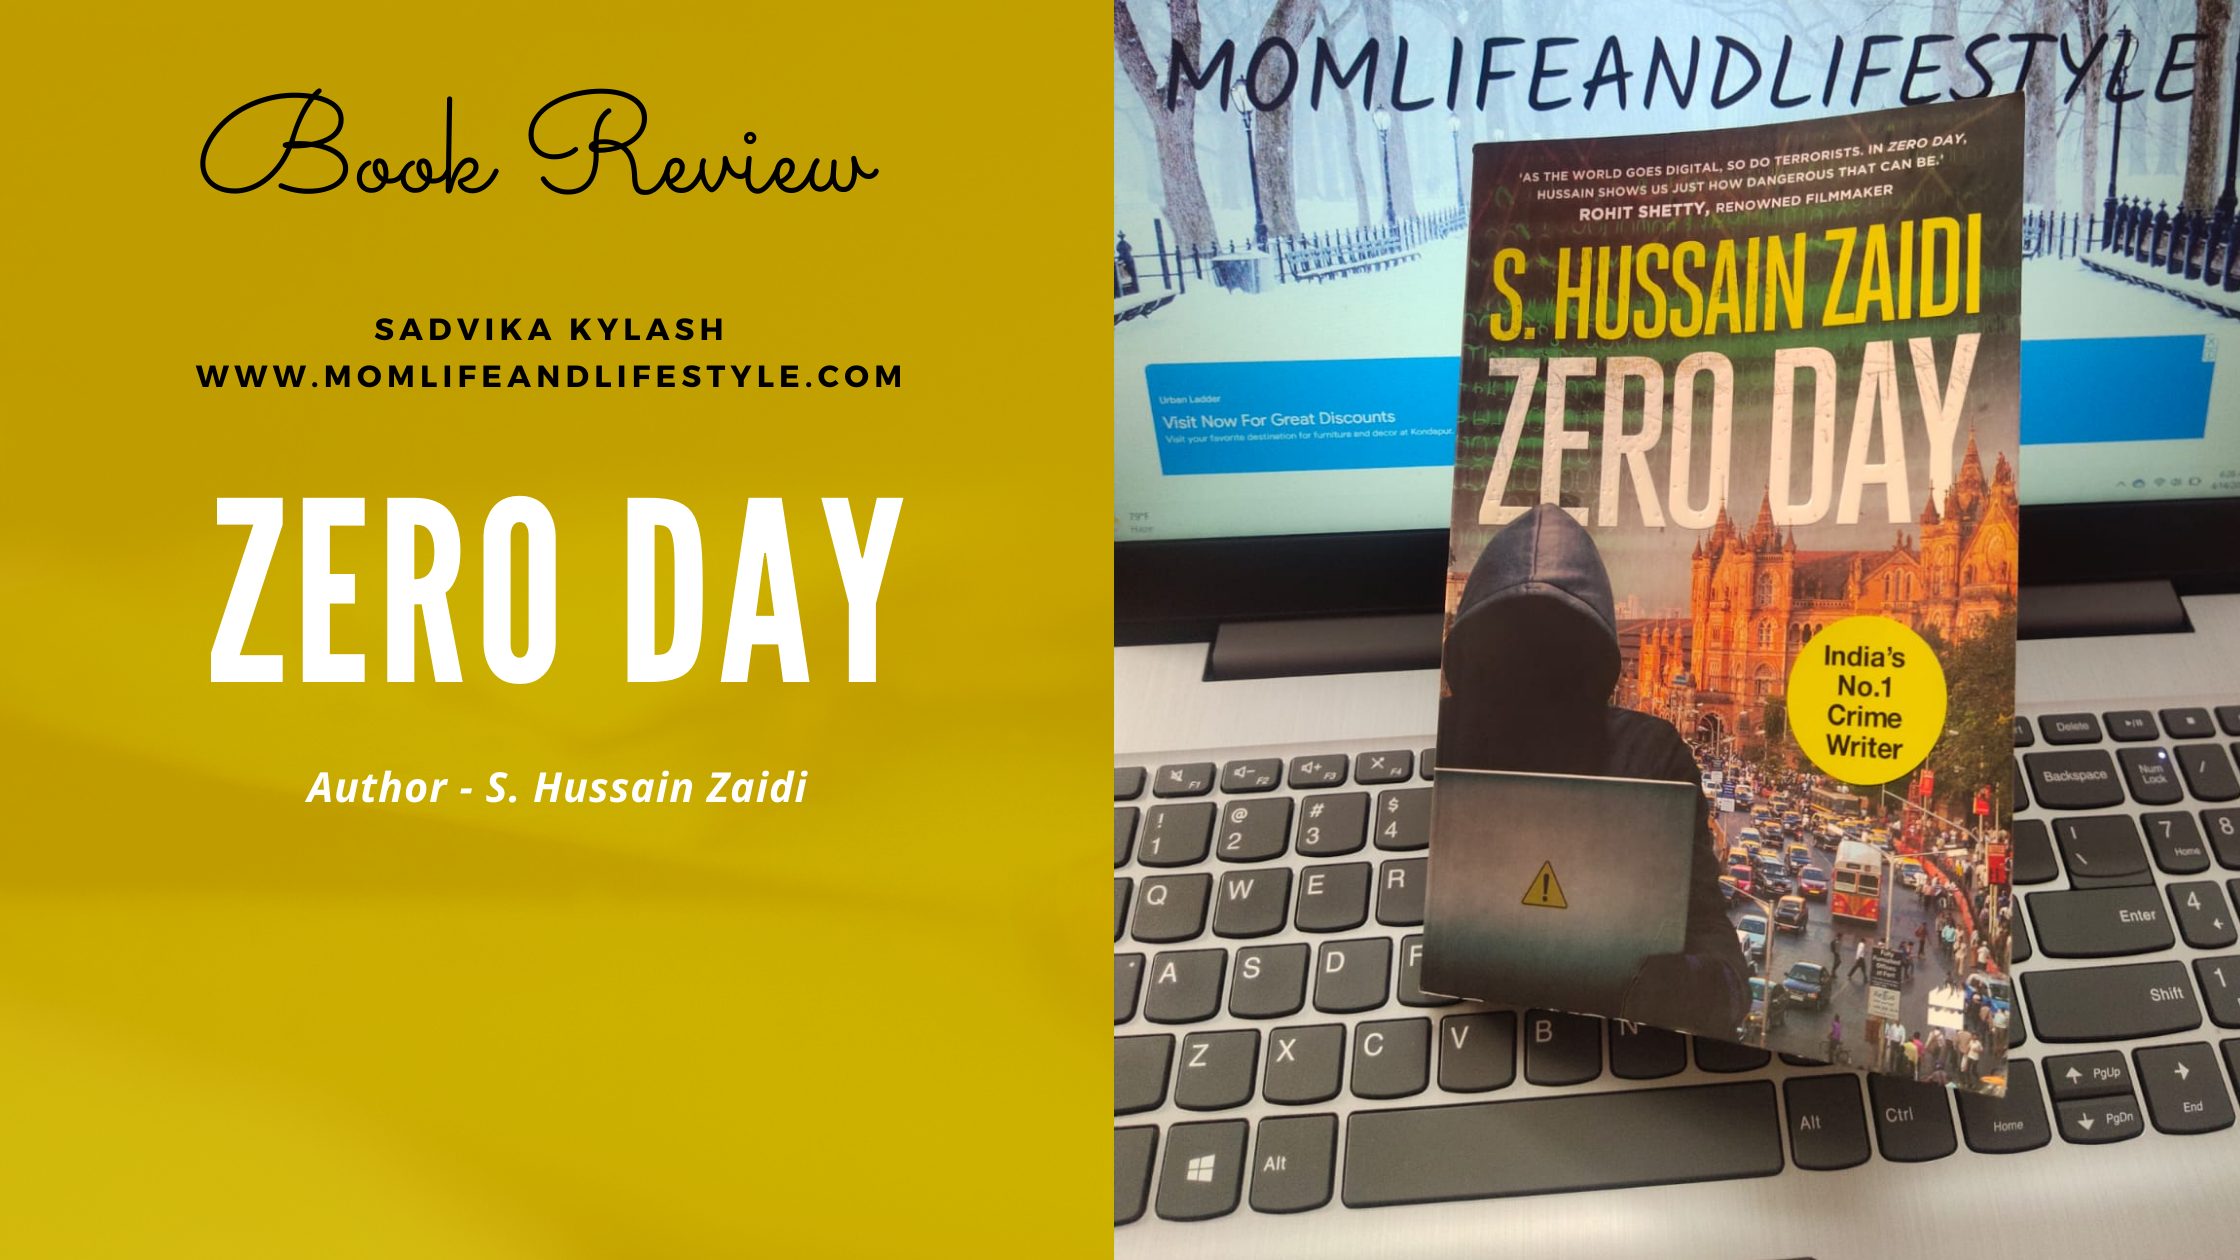 The Zero Day. Book review by Sadvika Kylash